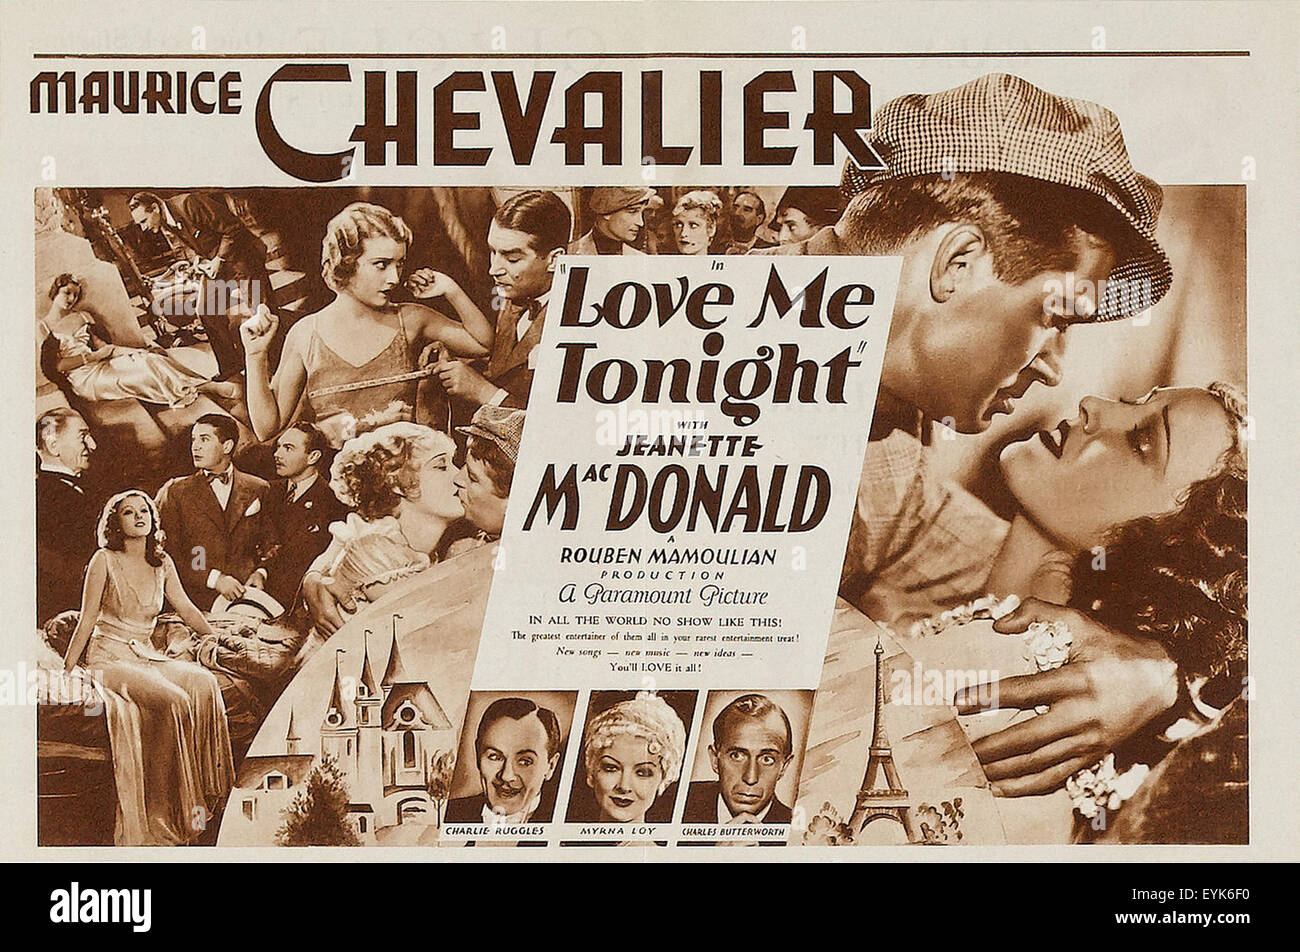 Love Me Tonight - Maurice Chevalier - Movie Poster Stock Photo